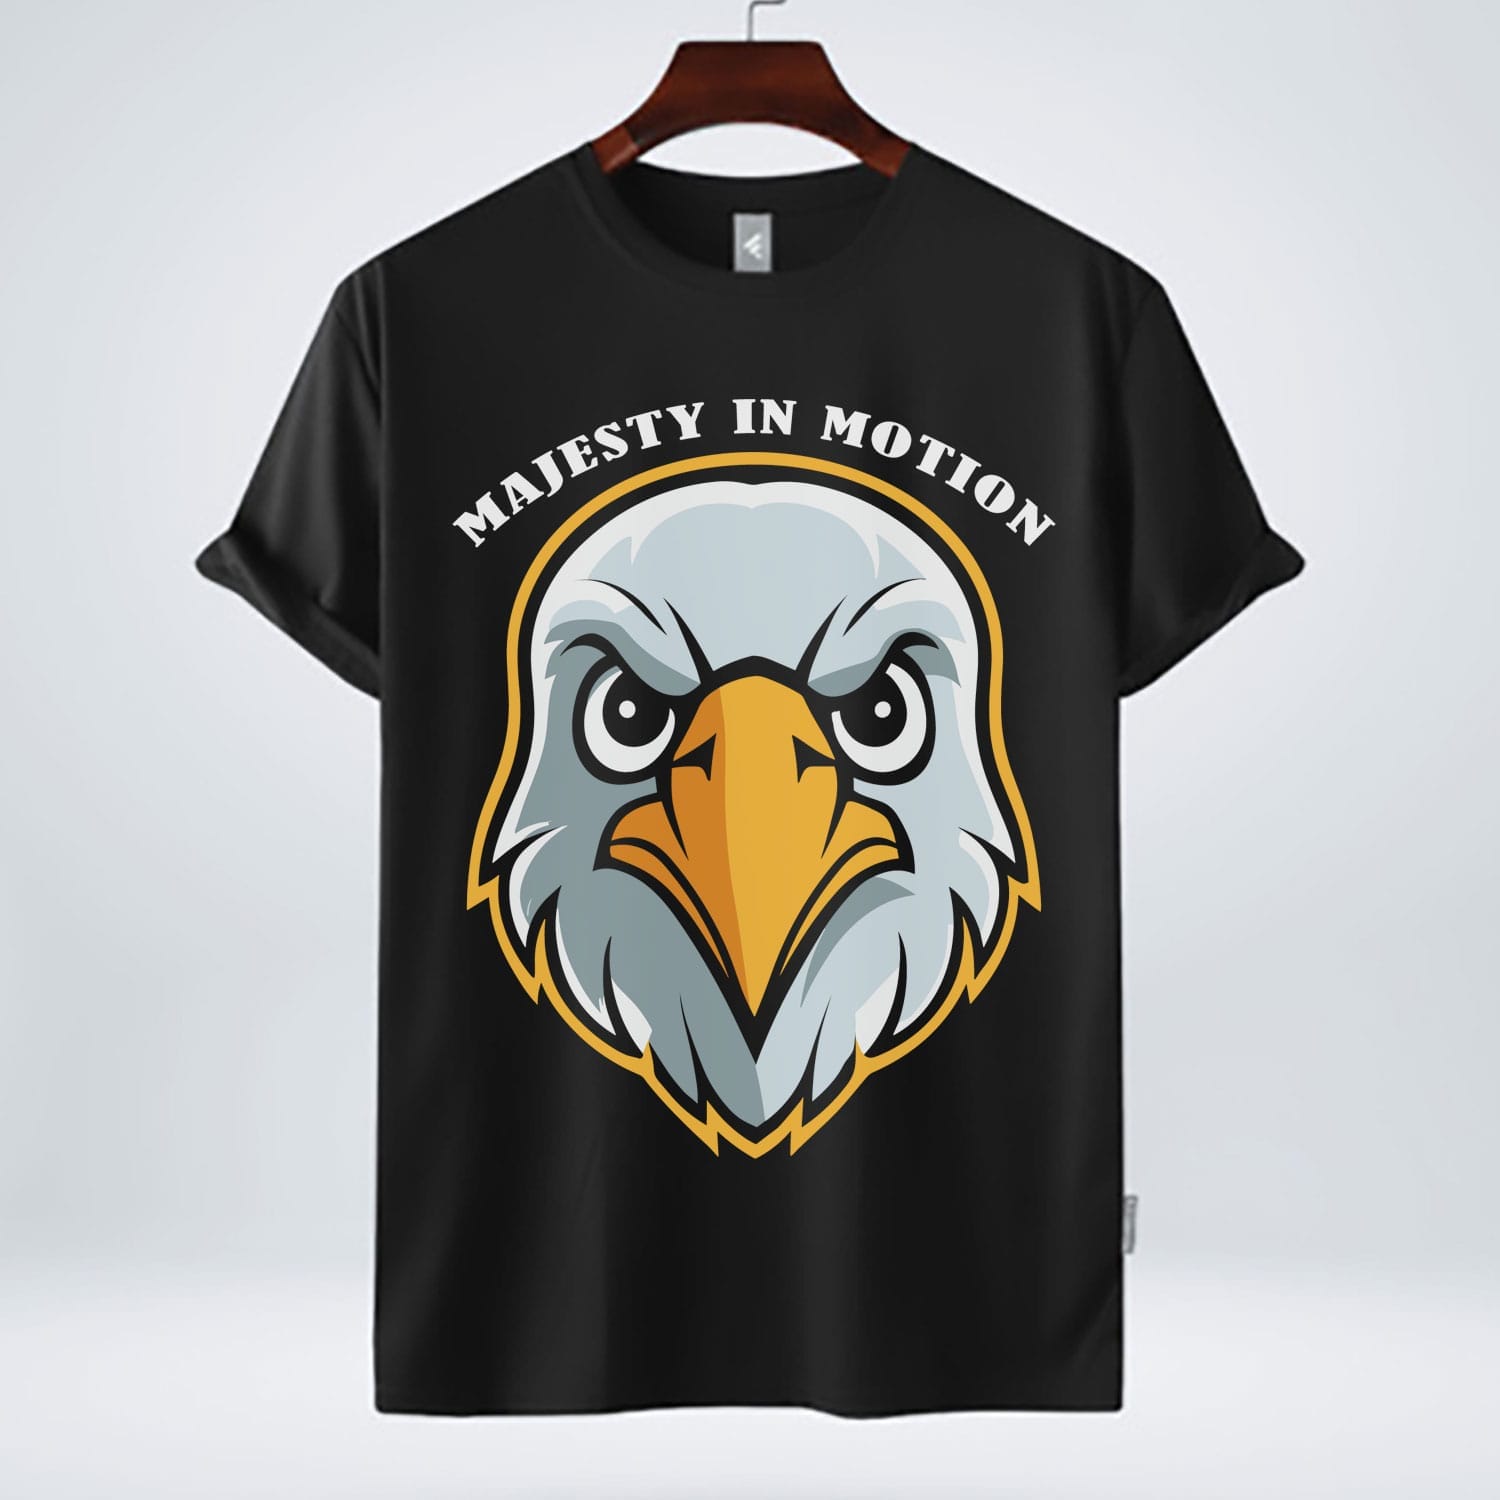 Majesty in motion eagle t shirt design